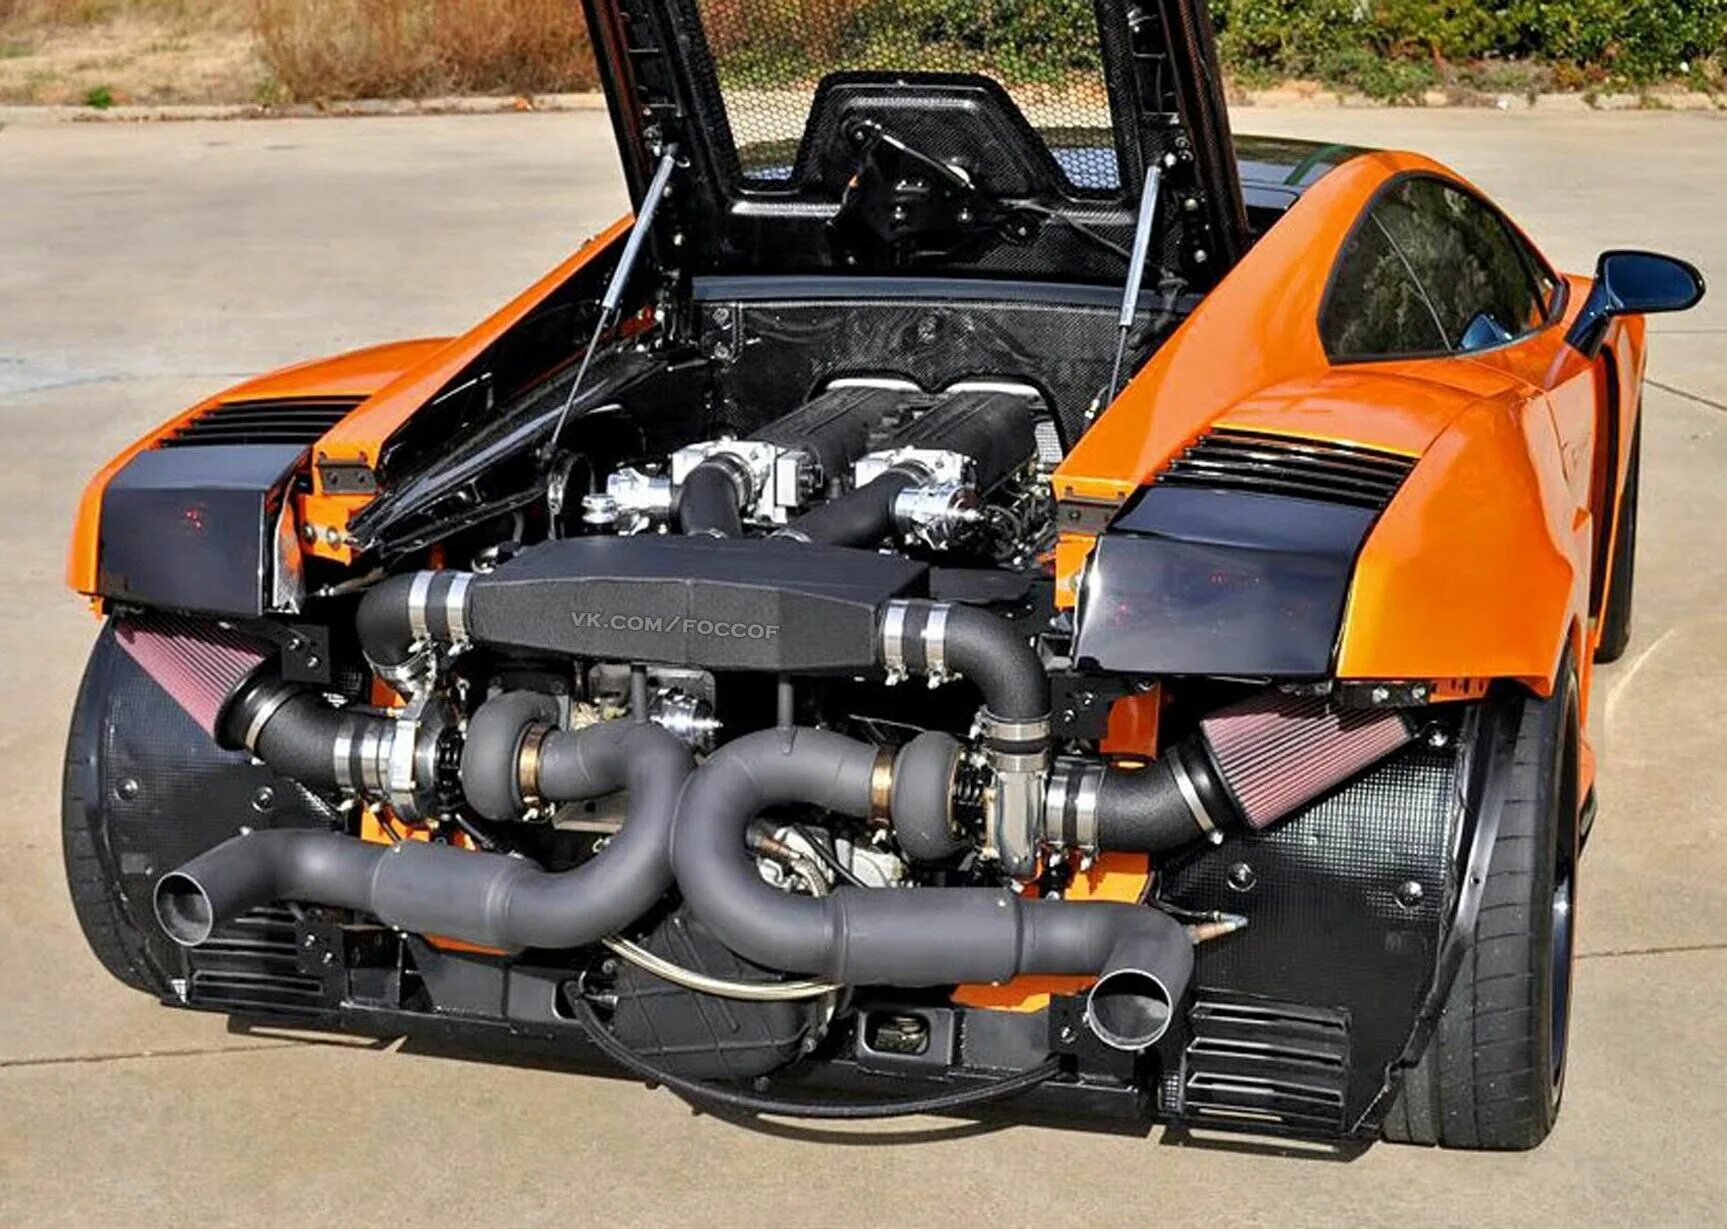 Lamborghini Gallardo TVIN Turbo. Ламборгини в12 Твин турбо. Lamborghini Gallardo Twin Turbo ДВС. В8 Twin Turbo.